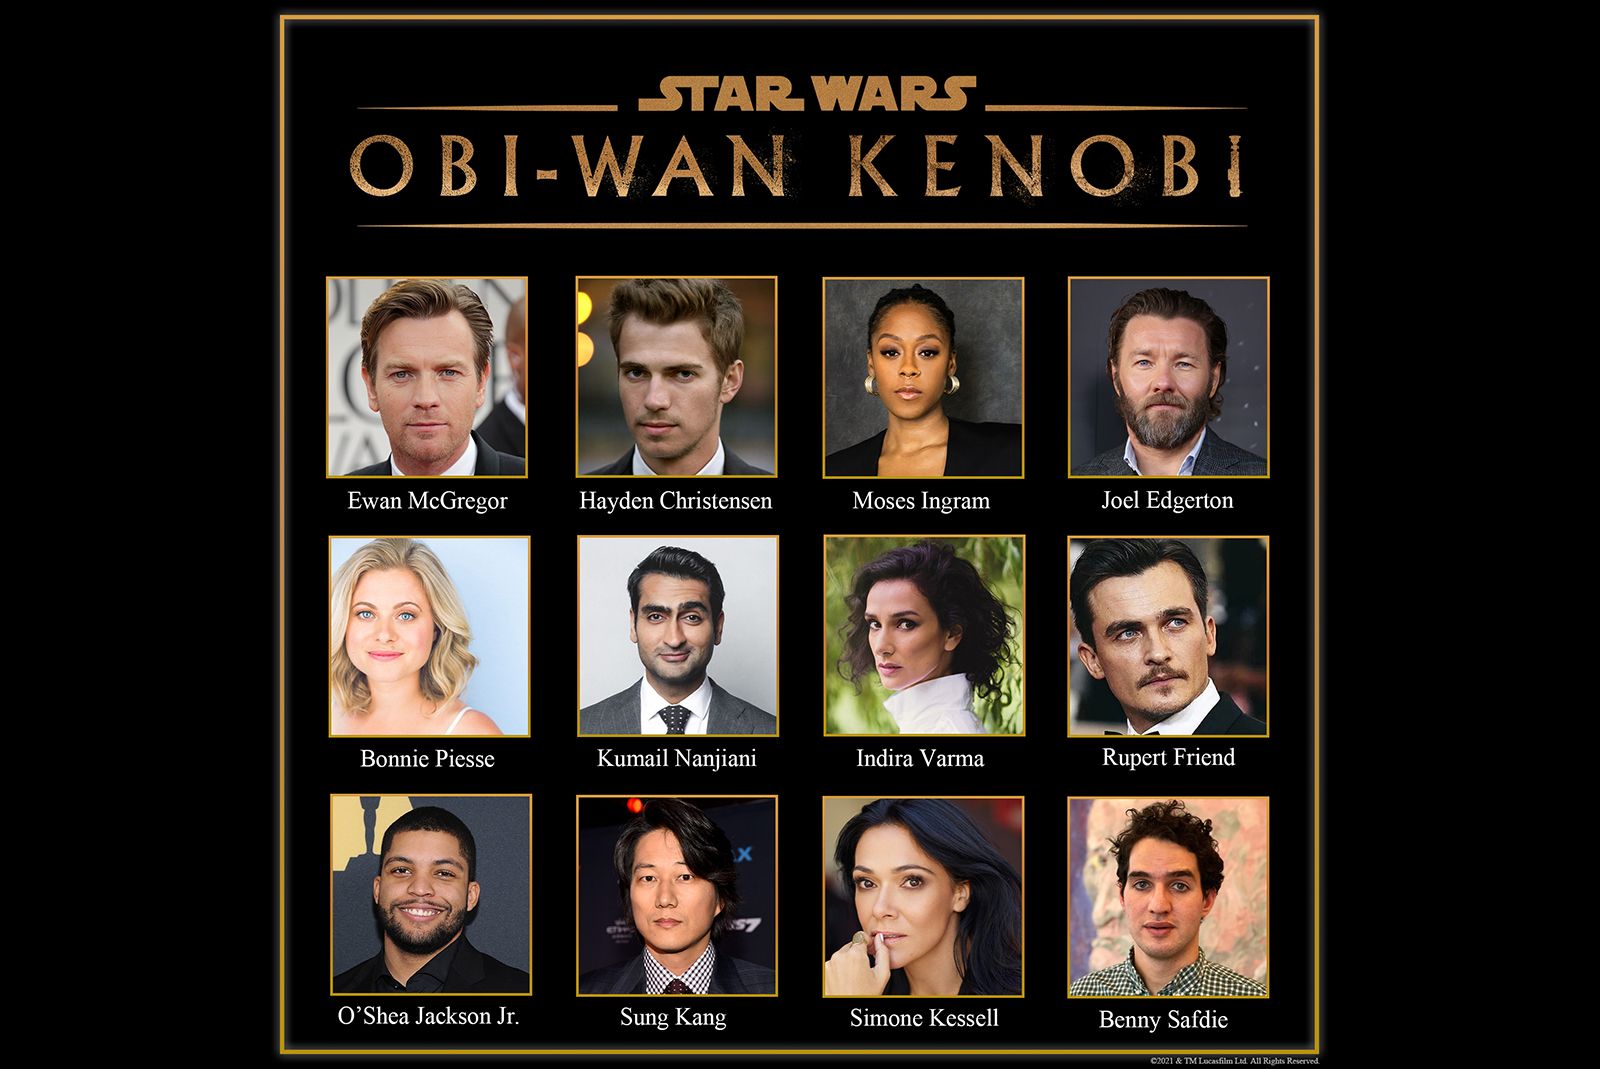 Obi-Wan Kenobi series: Release date, cast, trailers, and show rumours photo 6